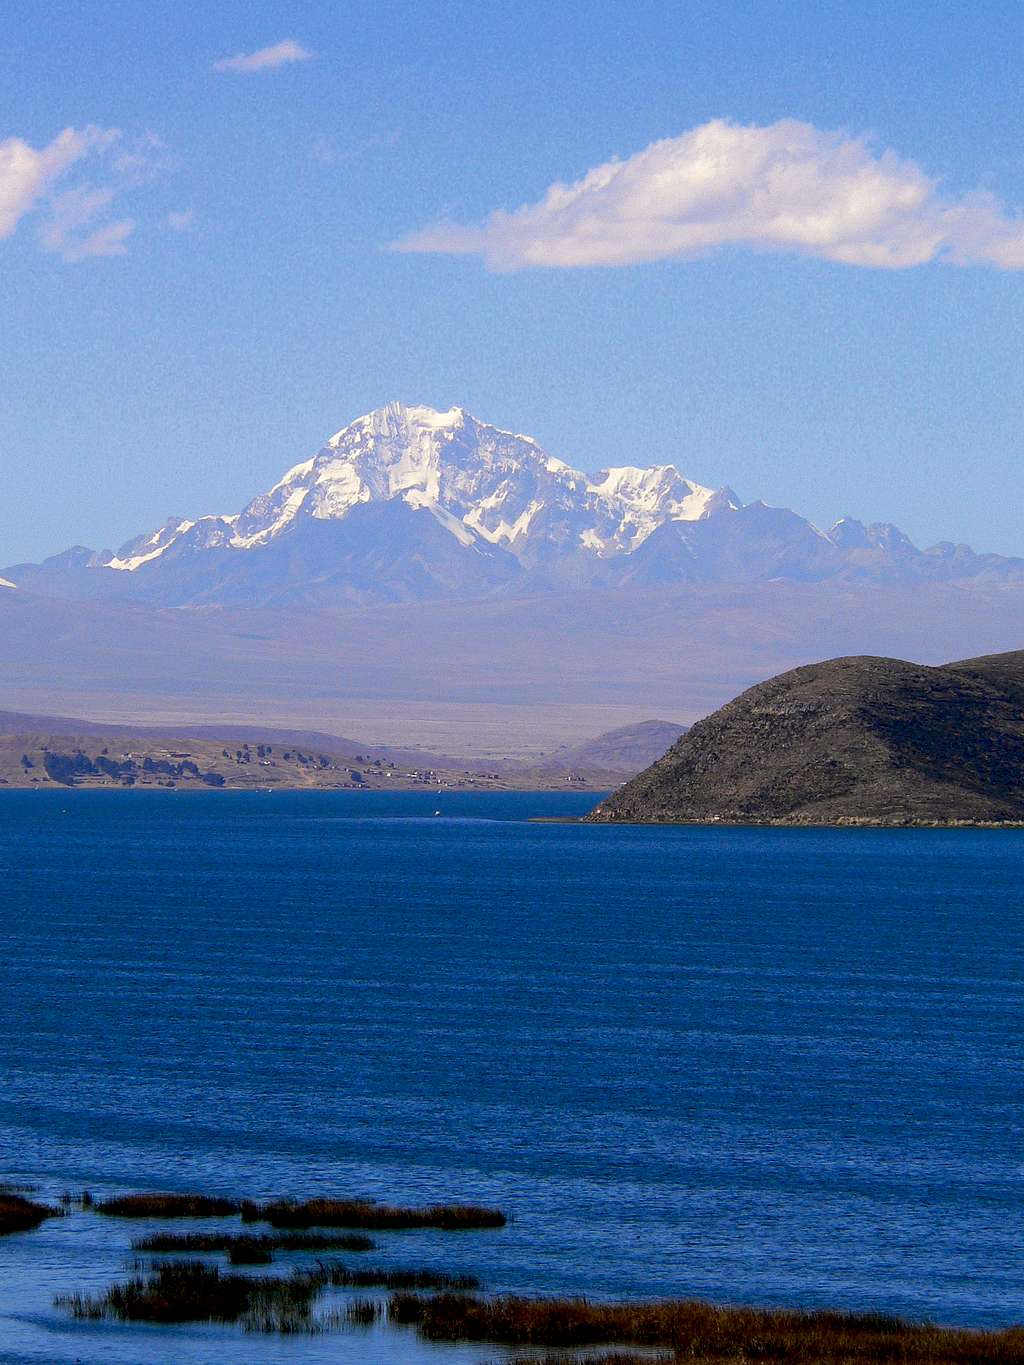 Huayna Potosi from Lake Titicaca